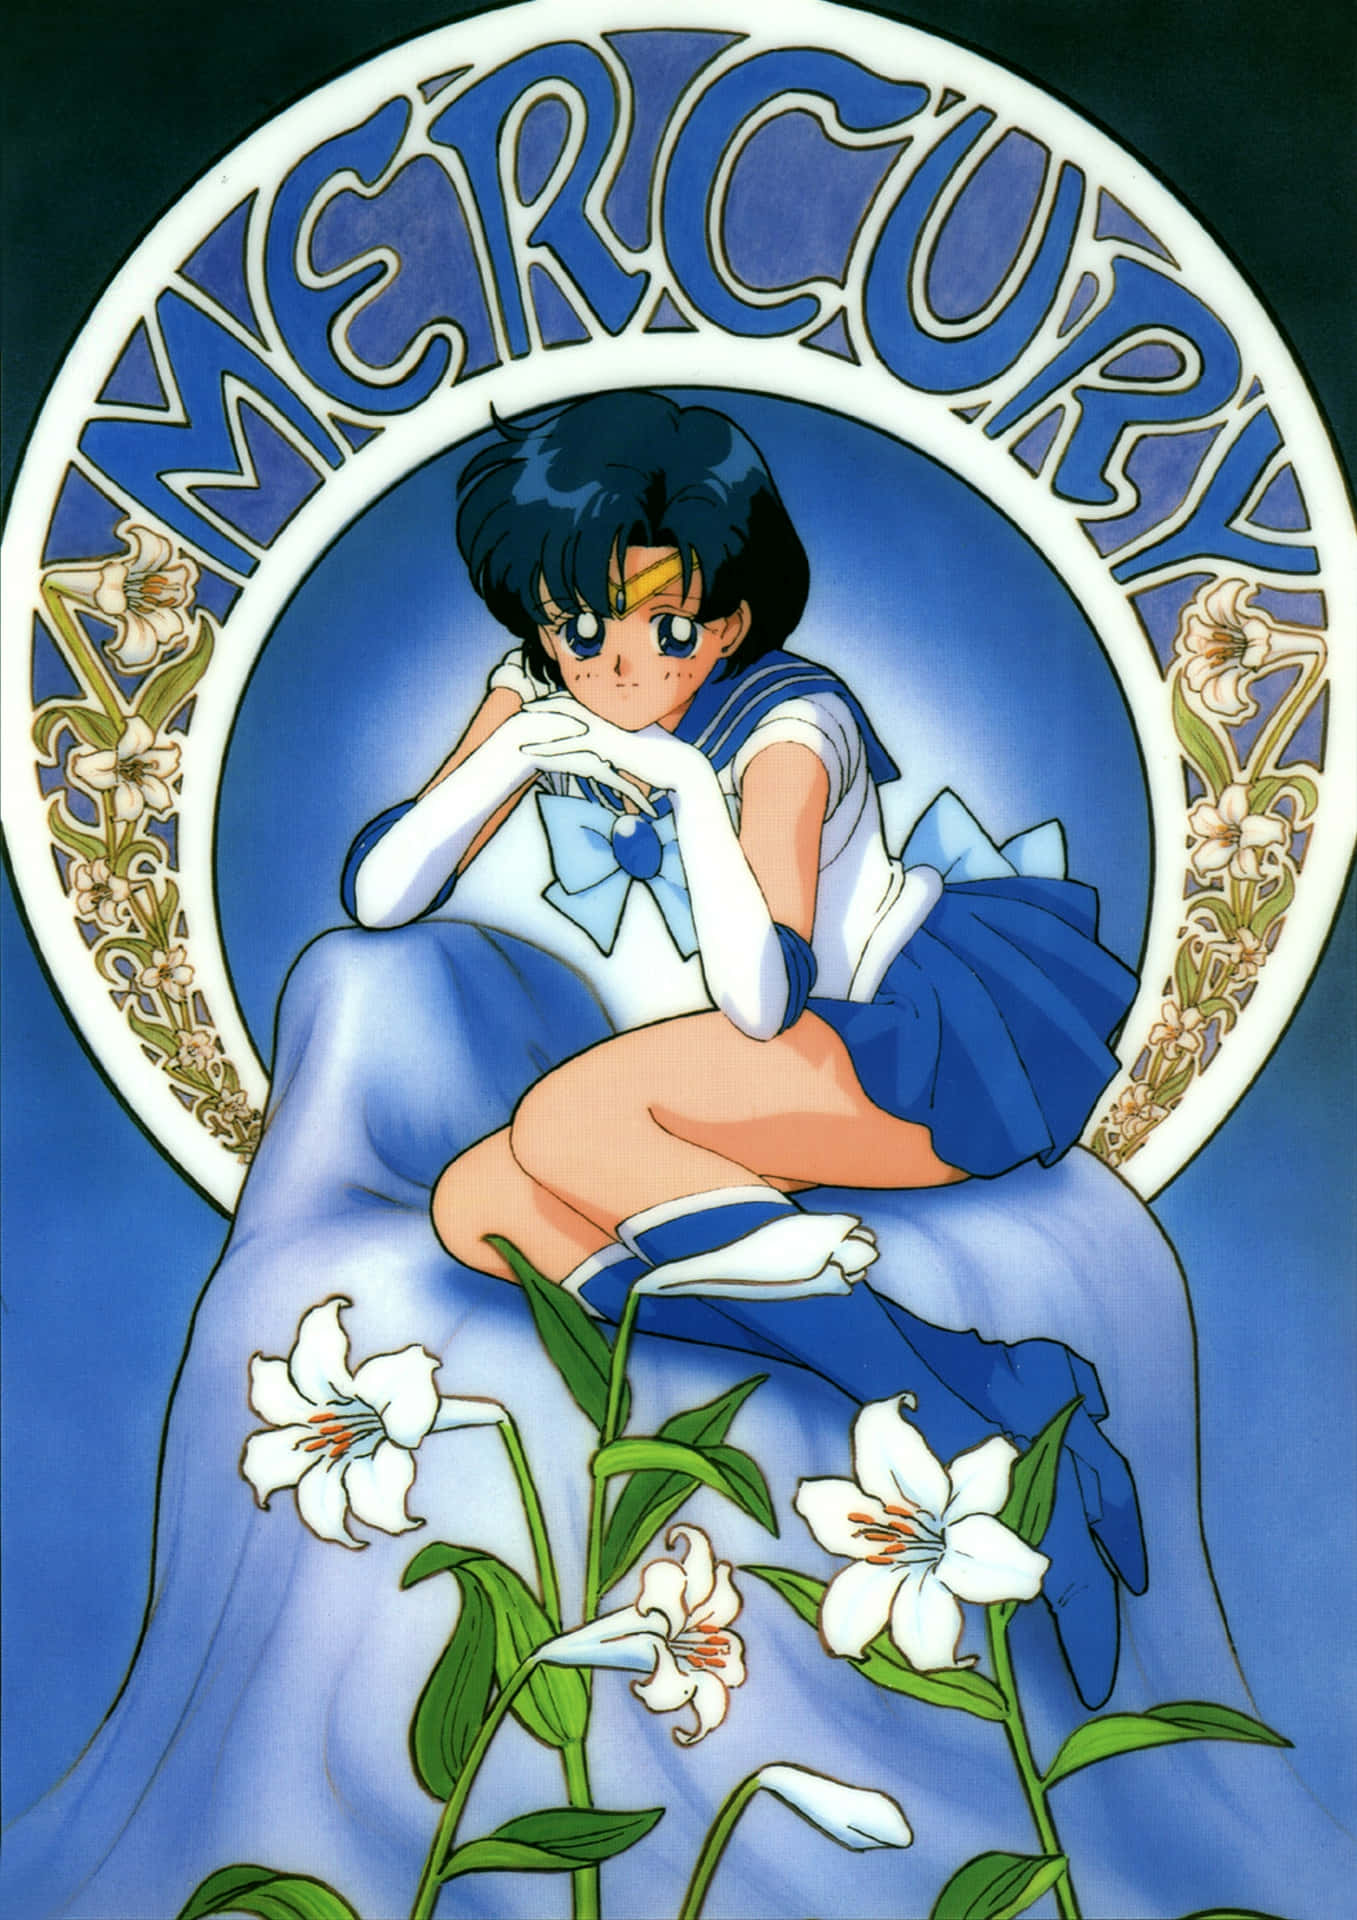 100+] Sailor Mercury Wallpapers | Wallpapers.com